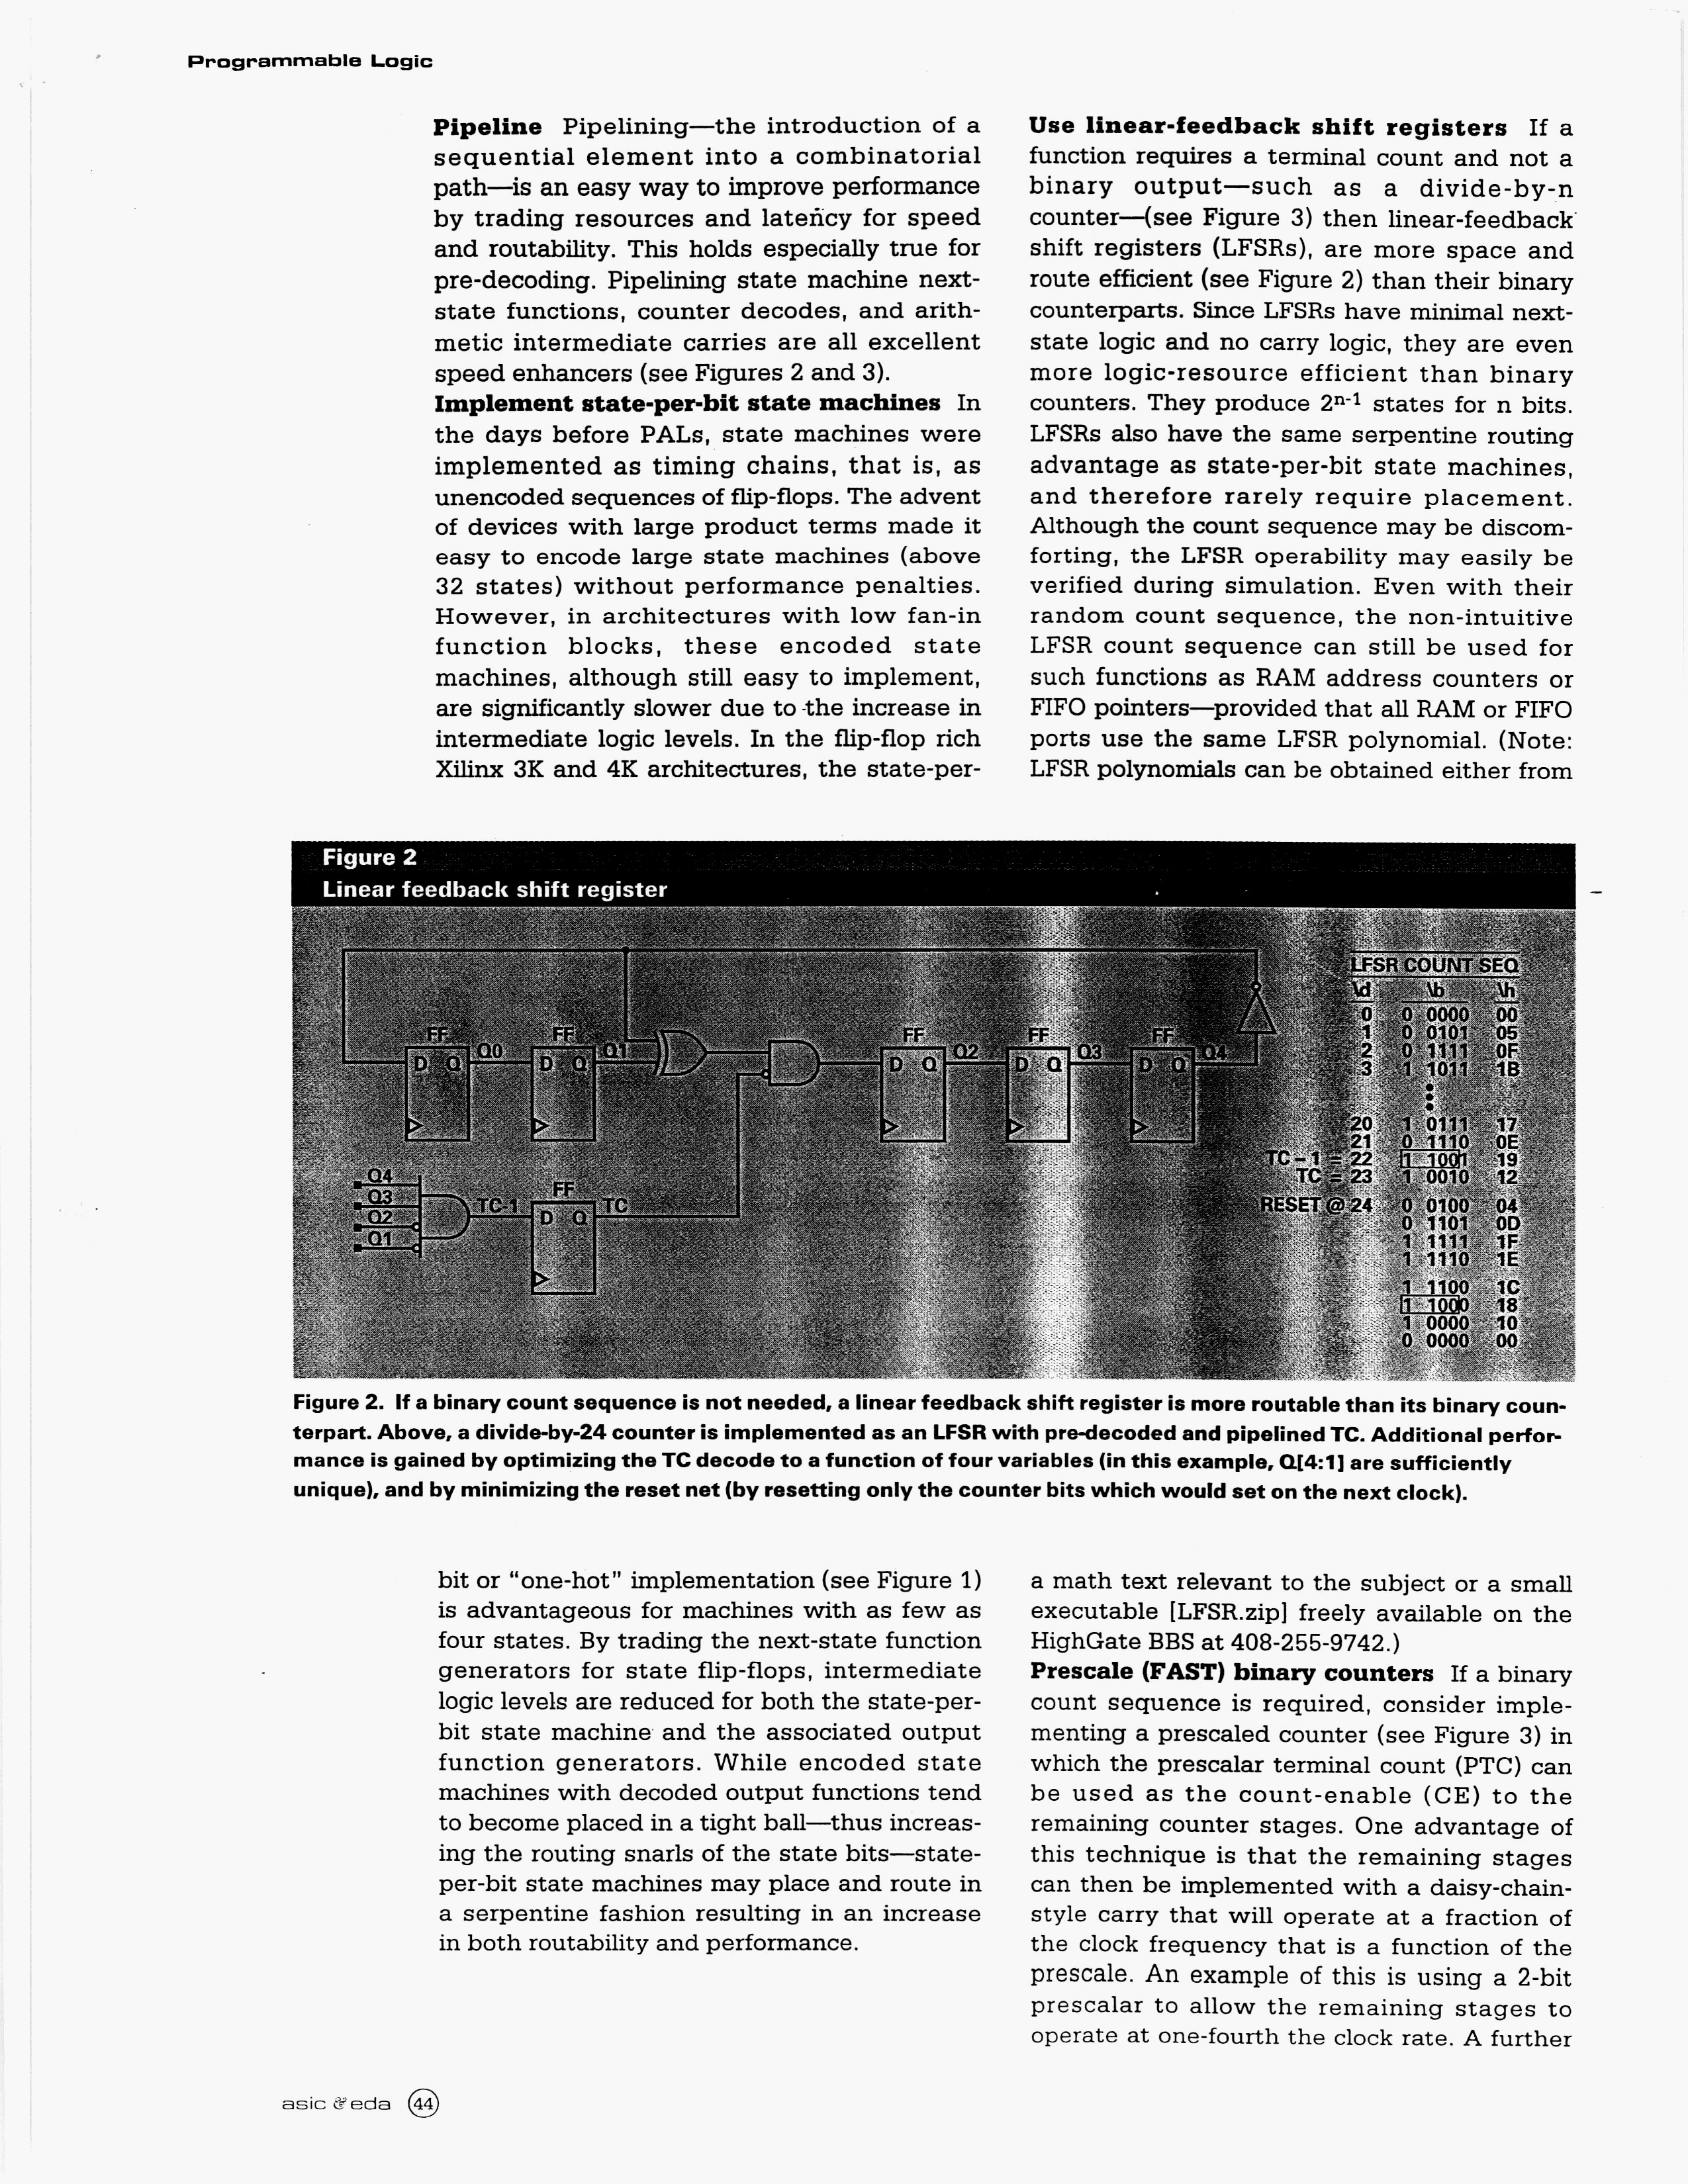 * Design Tips for High-Performance FPGA Design, Stephen Wasson, October 1994, ASIC & EDA page 3 *